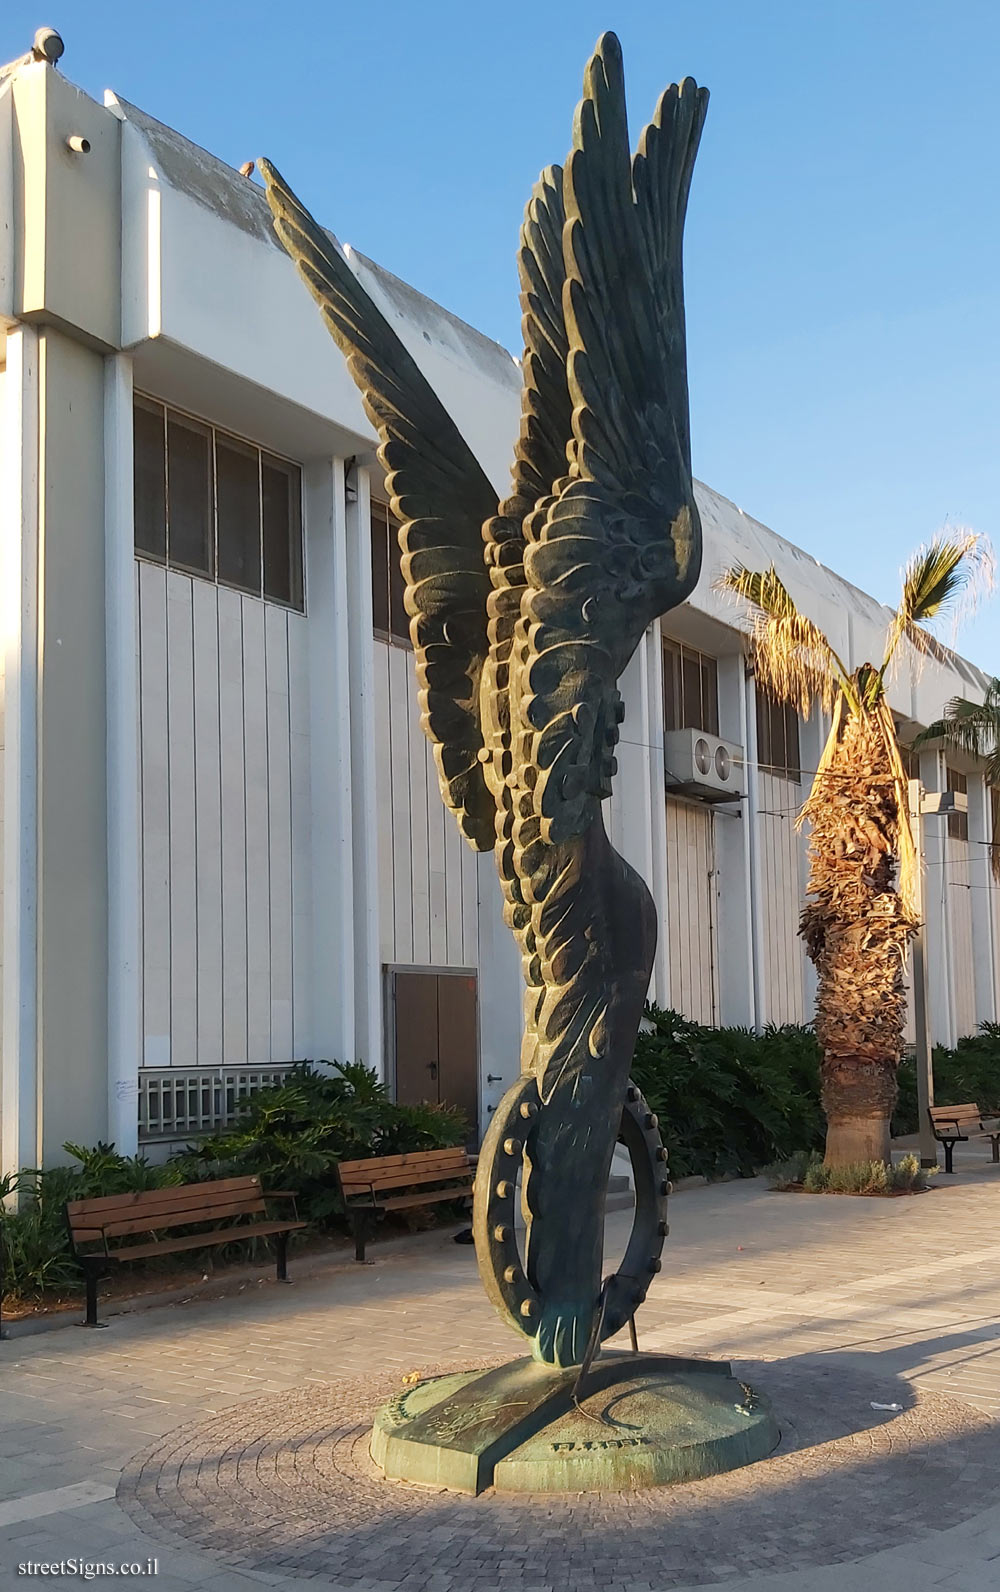 Tel Aviv - "Helolgal" outdoor sculpture by Motti Mizrachi - Yamin St 4, Tel Aviv-Yafo, Israel